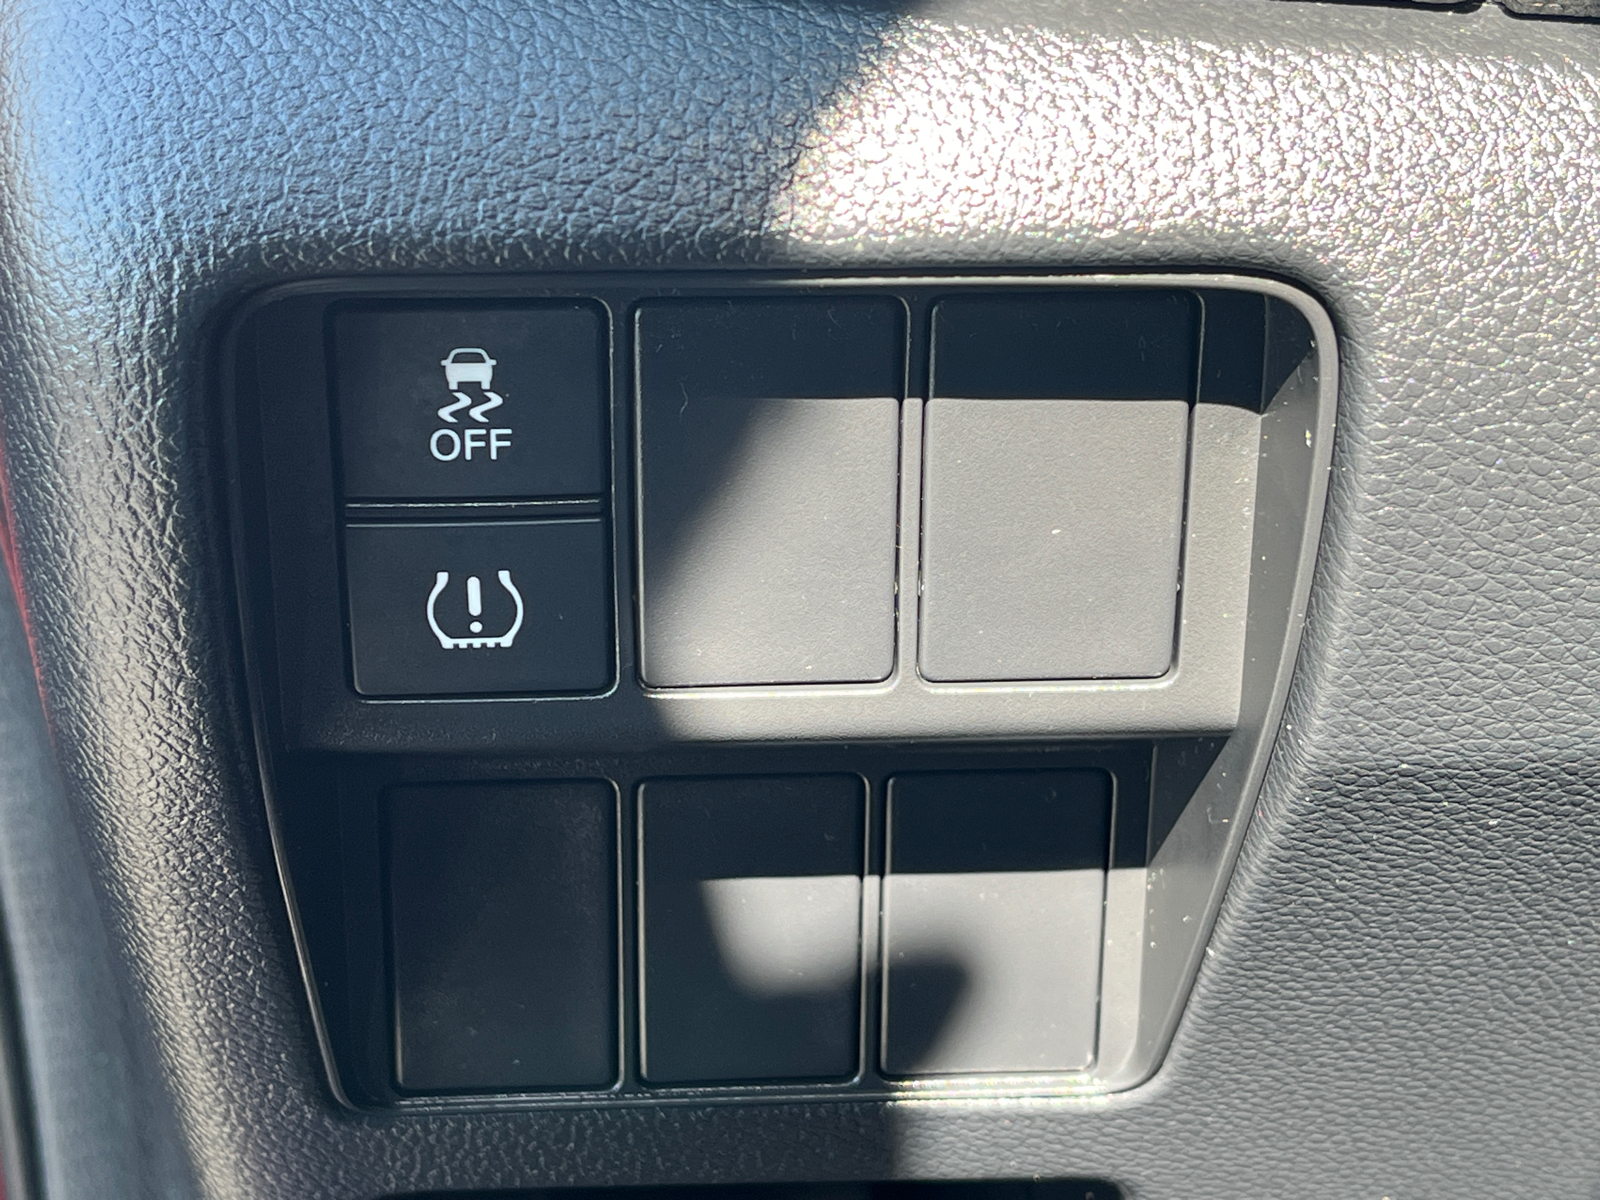 2019 Honda CR-V LX 19